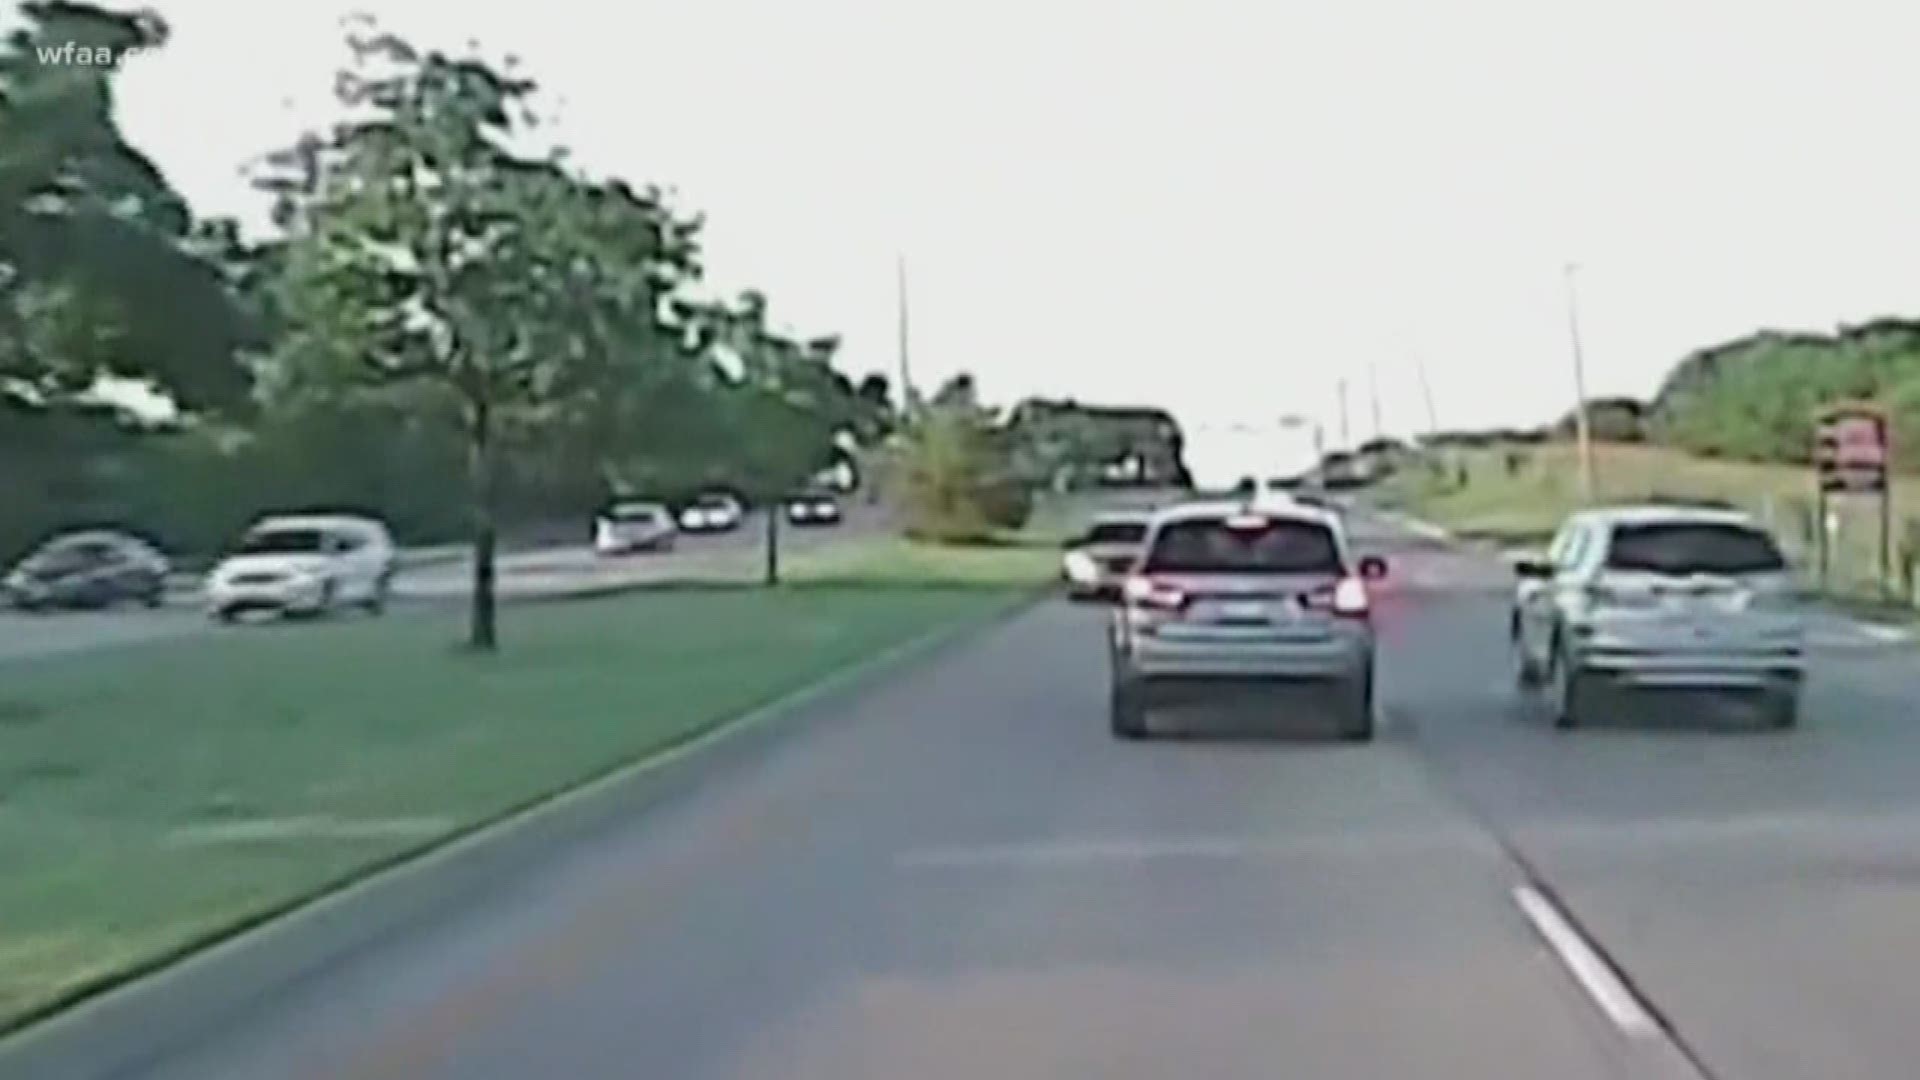 Man drives wrong way on highway